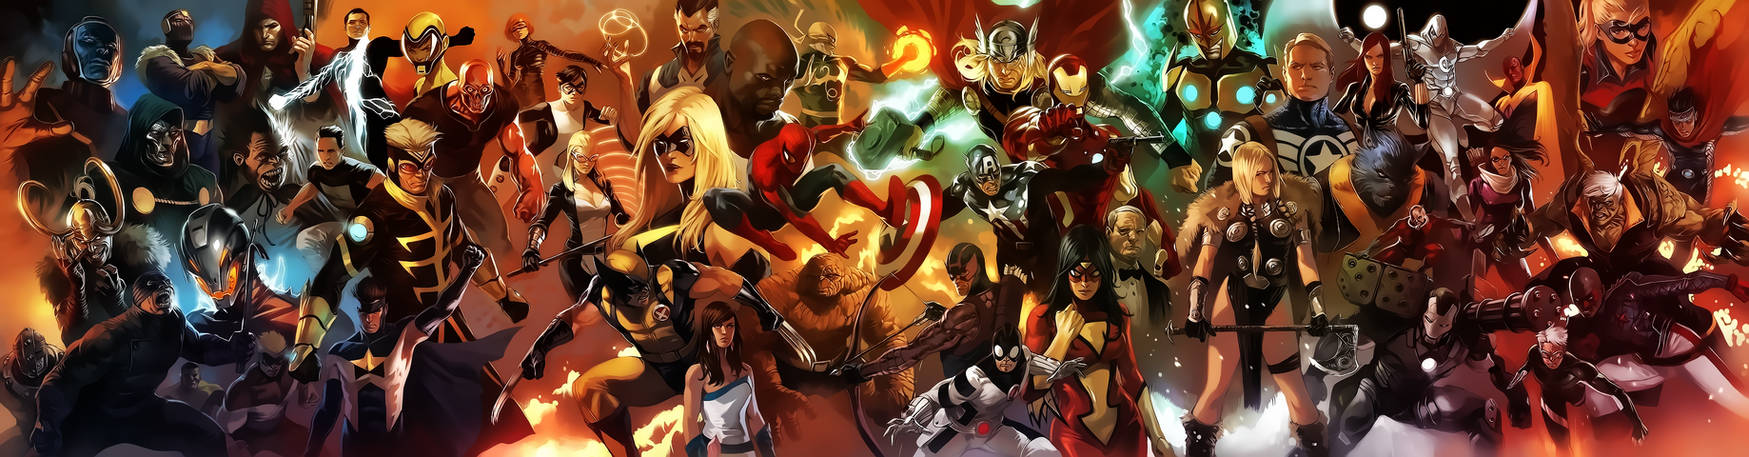 Marvel Universe - Avengers